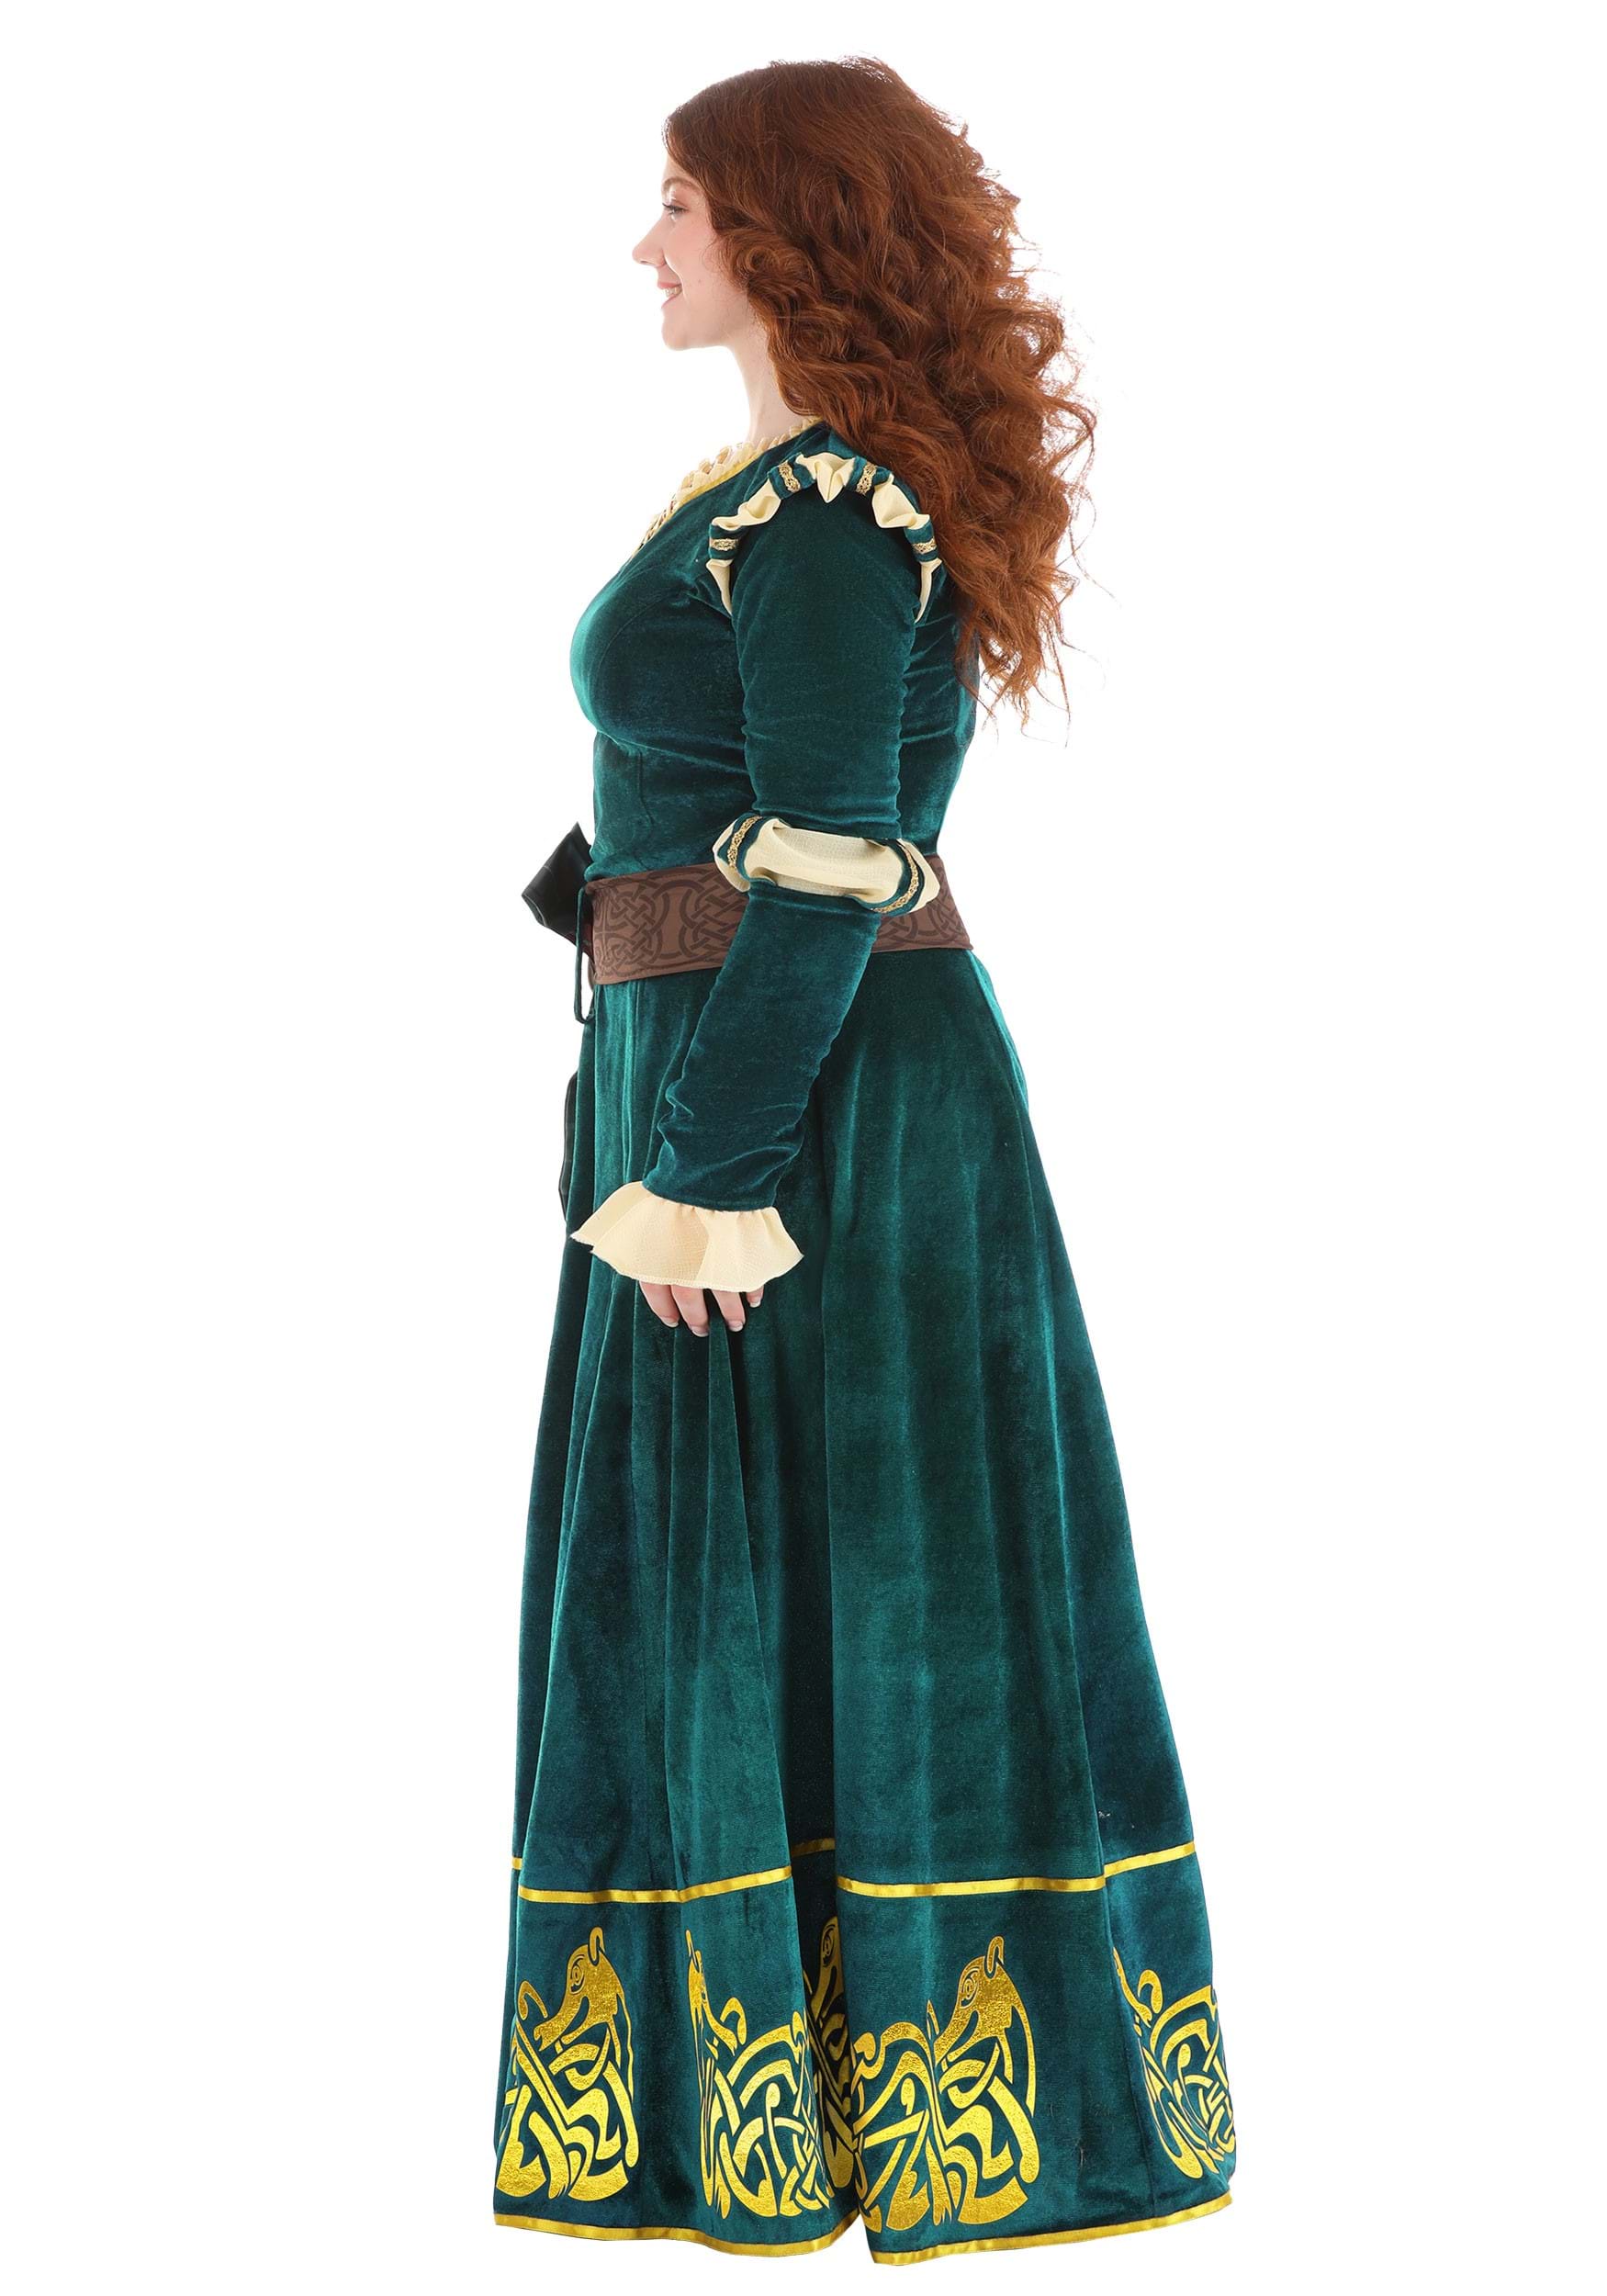 Women's Plus Size Premium Disney Merida Costume Dress